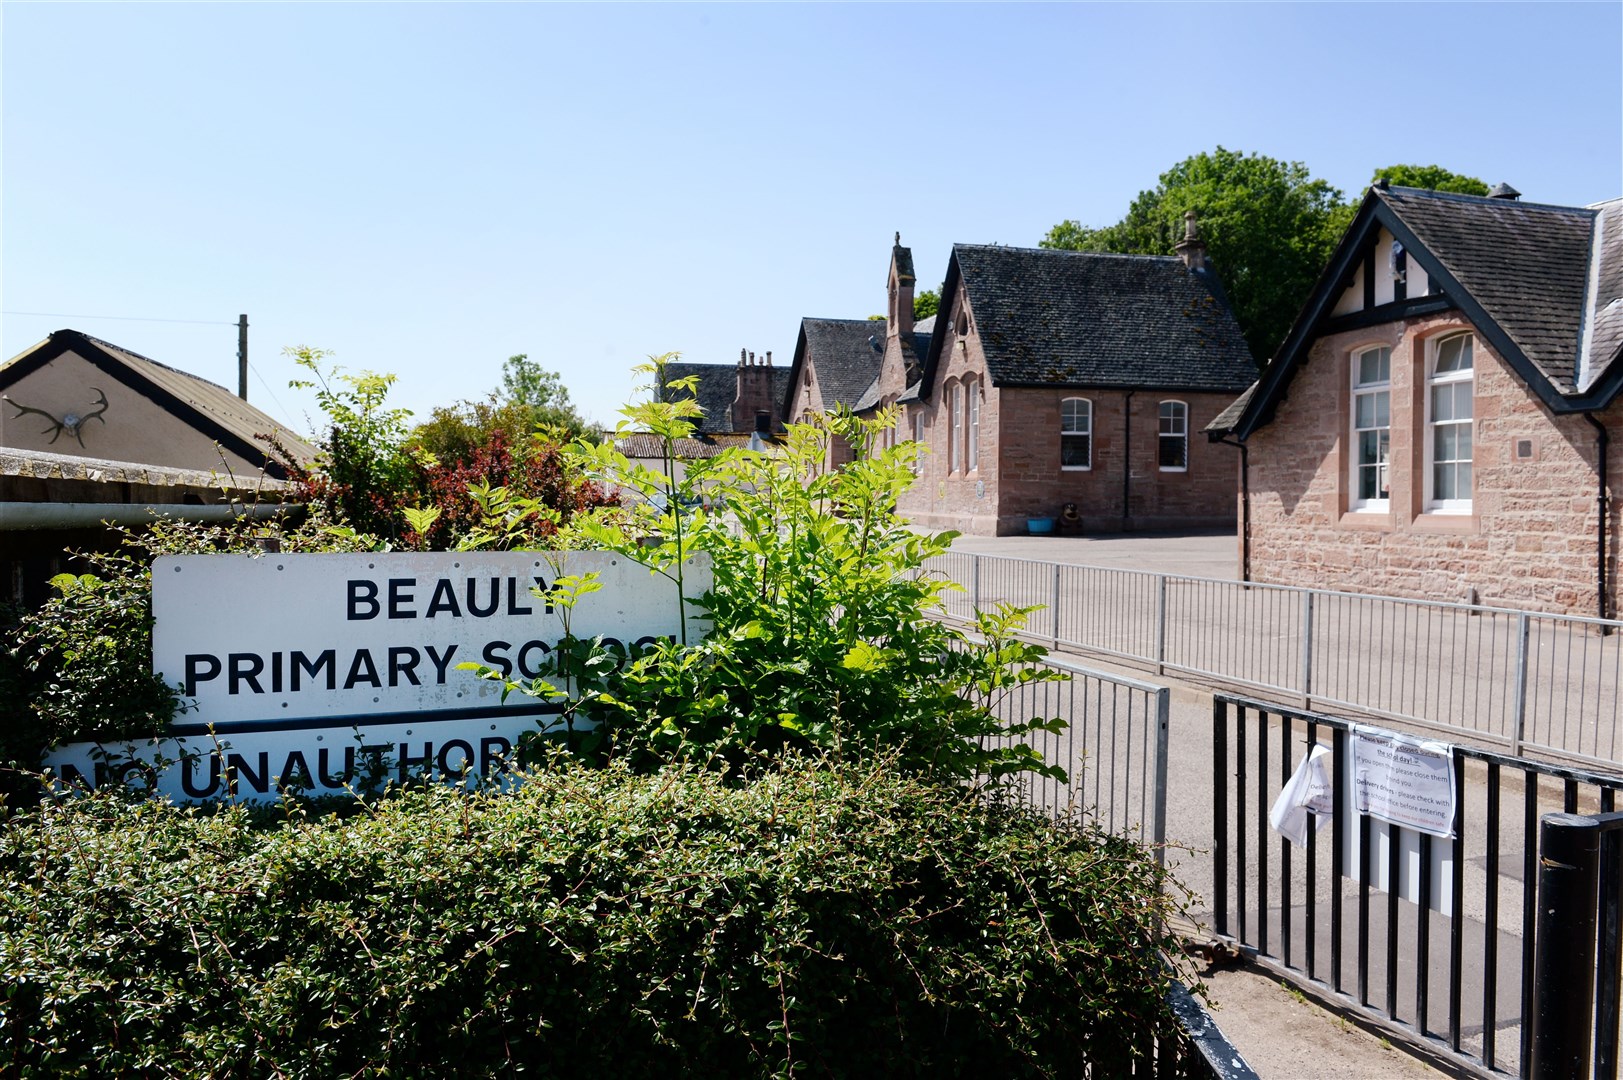 Beauly Primary School.